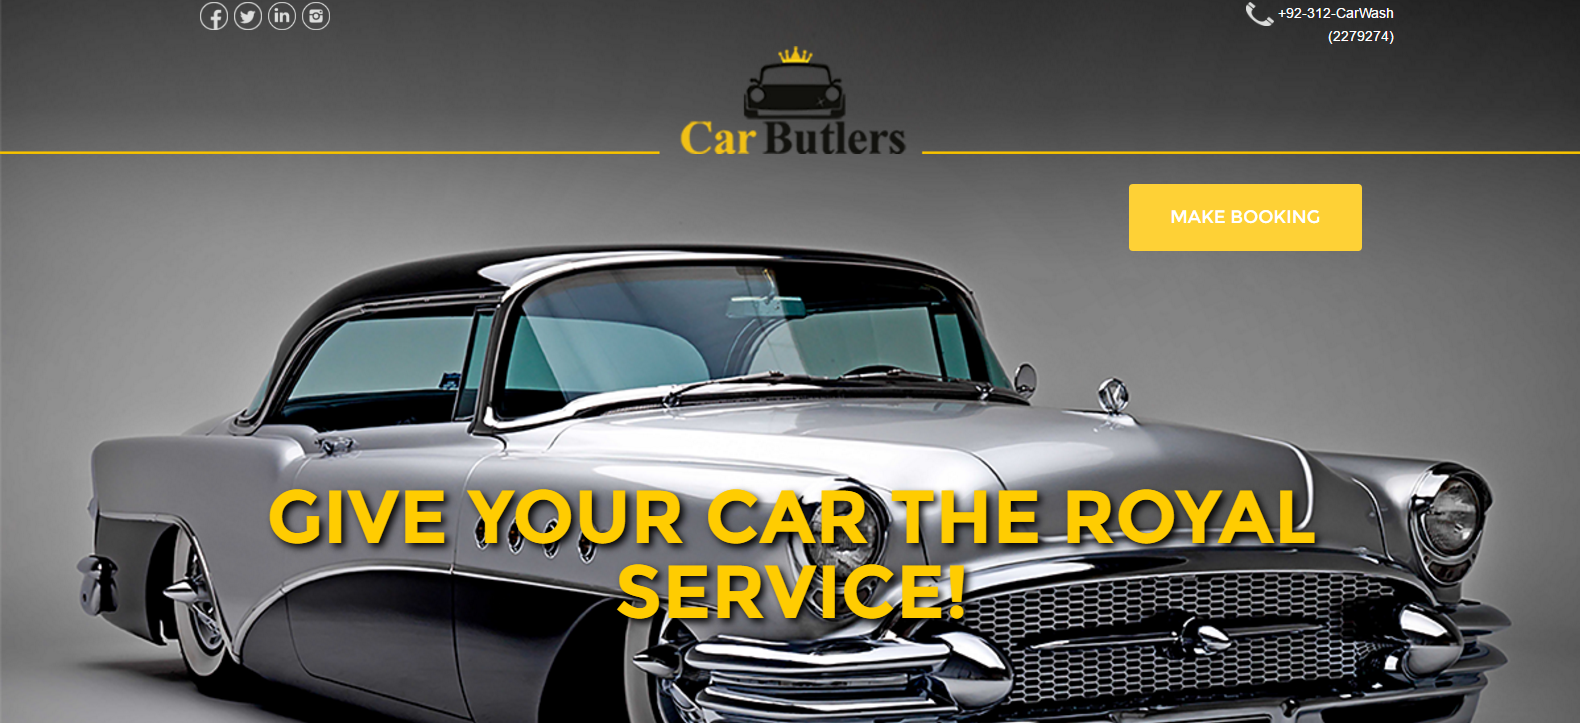 car-butlers-homepage-freshstartpk-onlinepr-startups-khawajamubasharmansoor